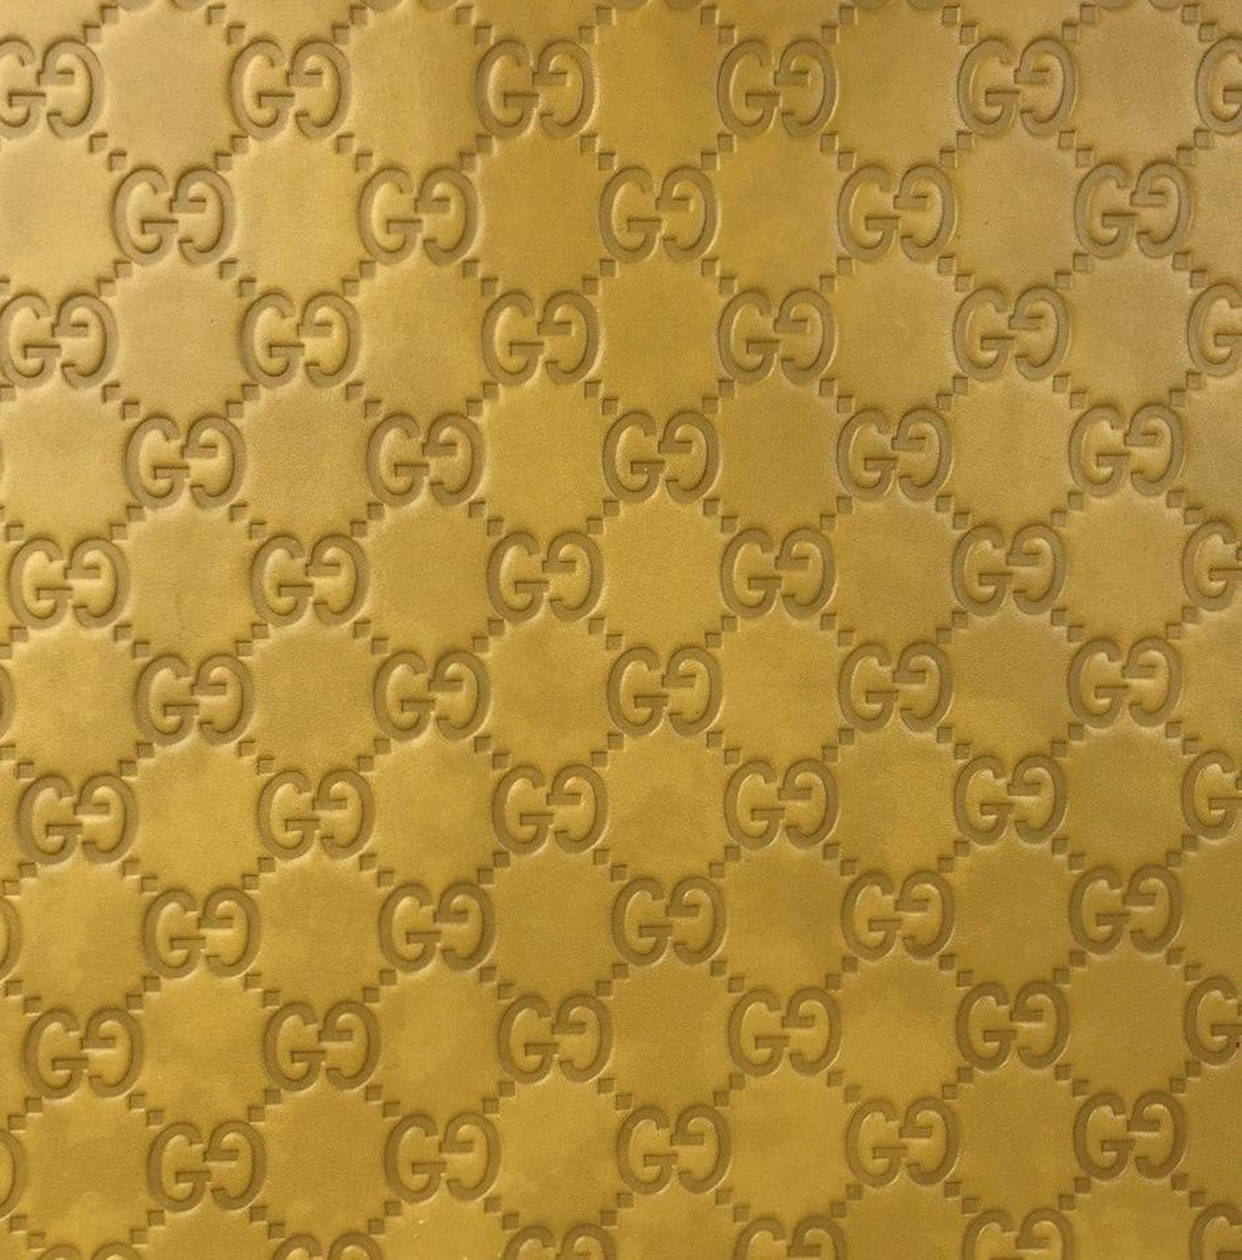 Gucci, gold, HD phone wallpaper